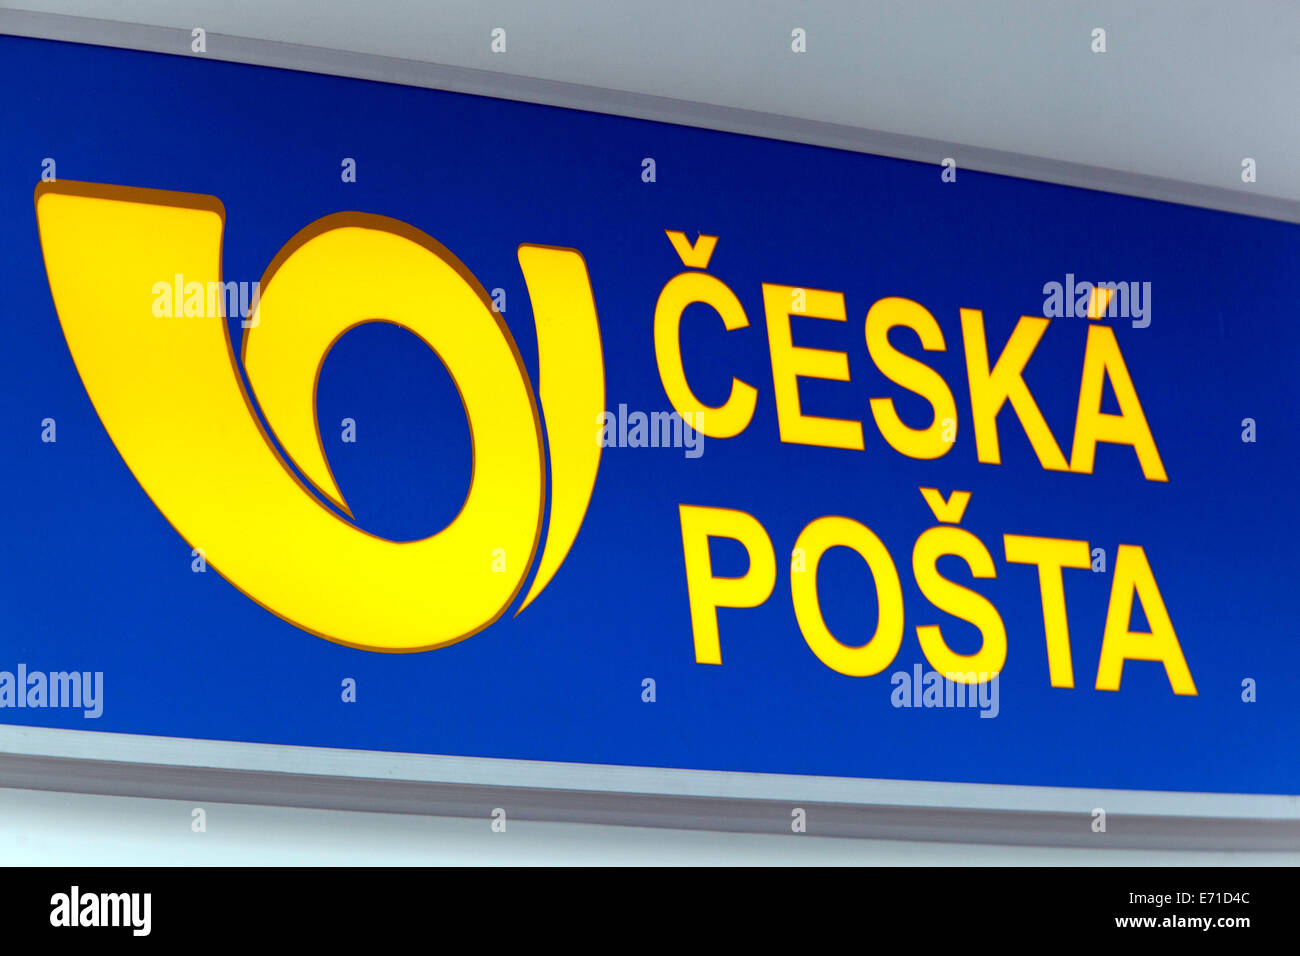 Ceska posta, Czech Post logo Stock Photo - Alamy